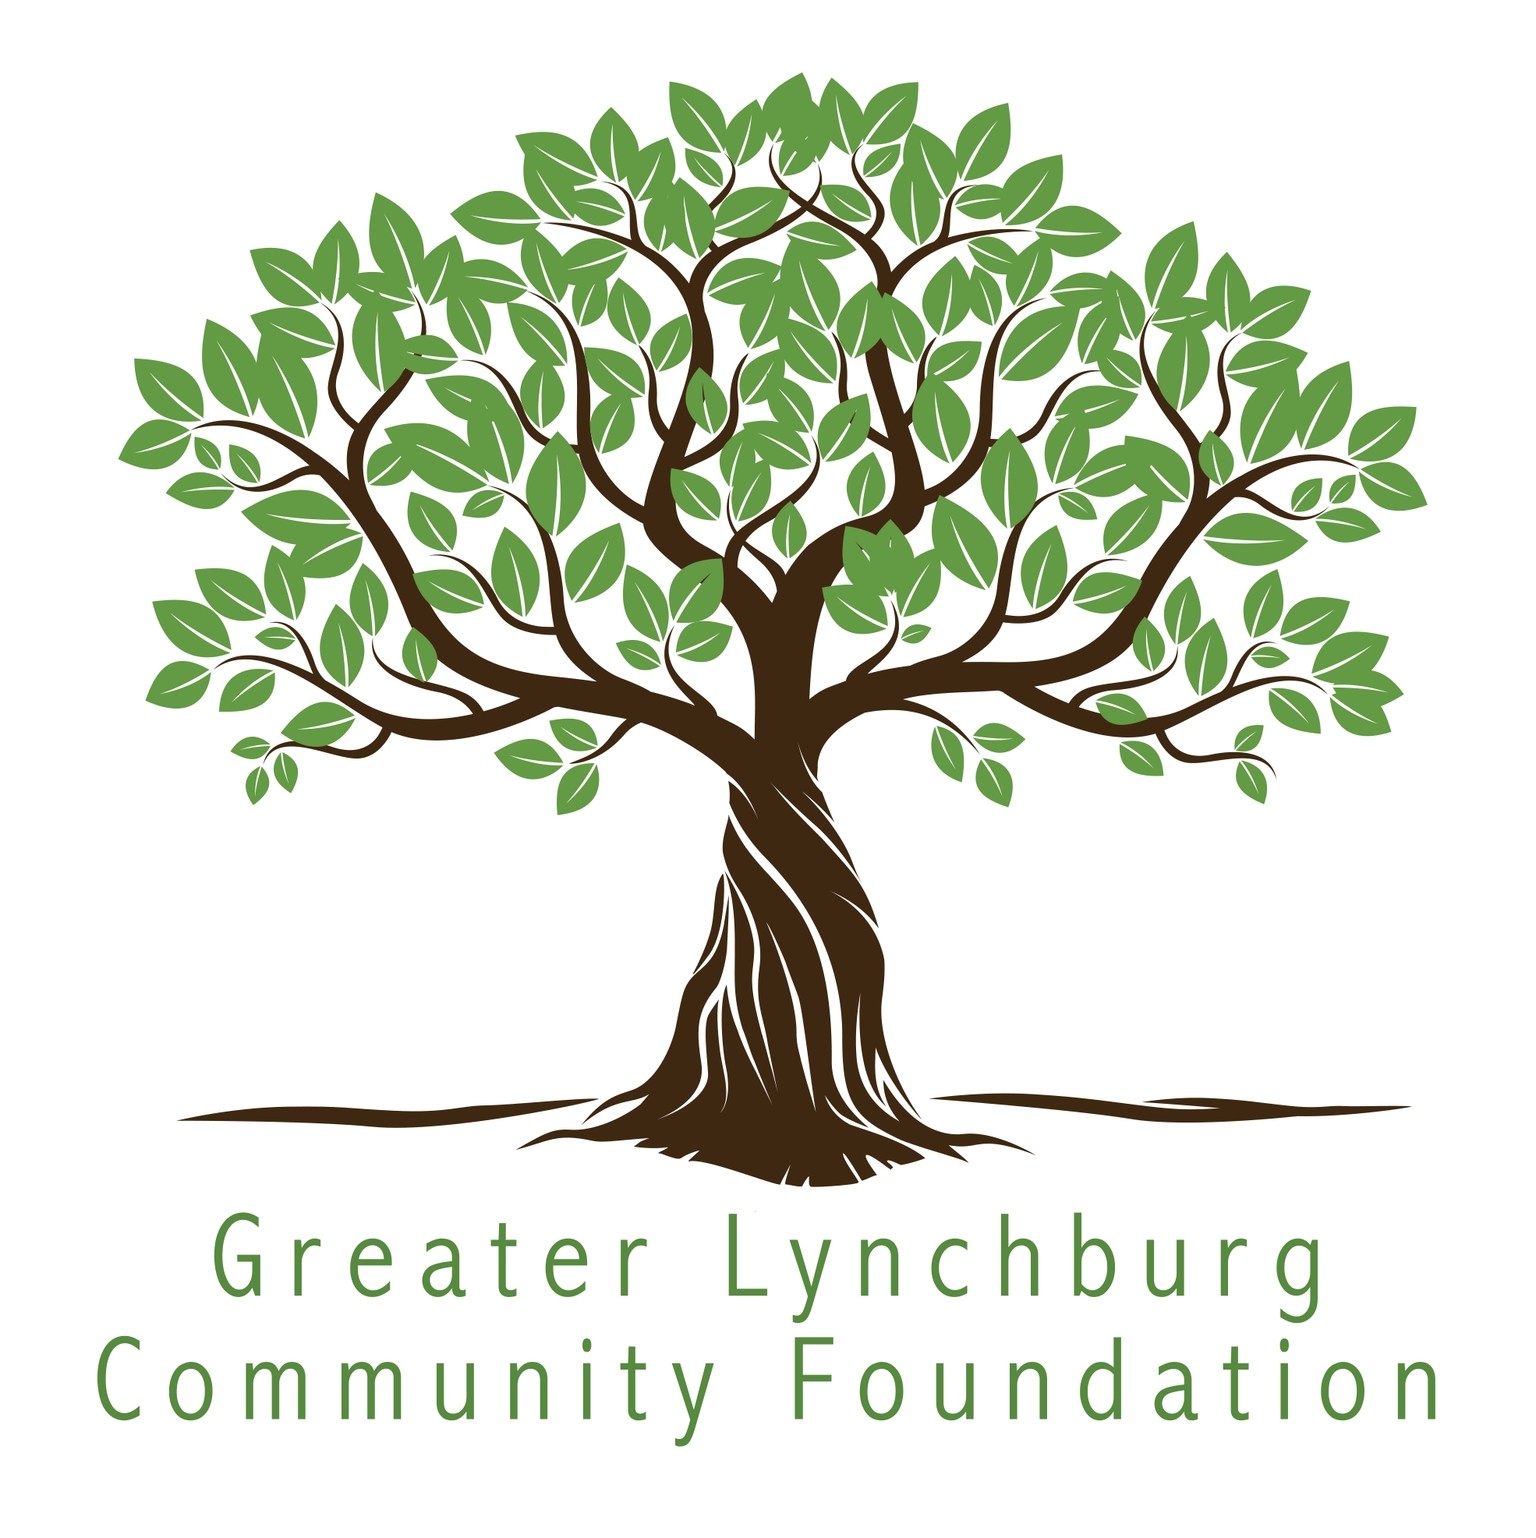 GLCF-Logo_FINAL1 (3).png - January 2018